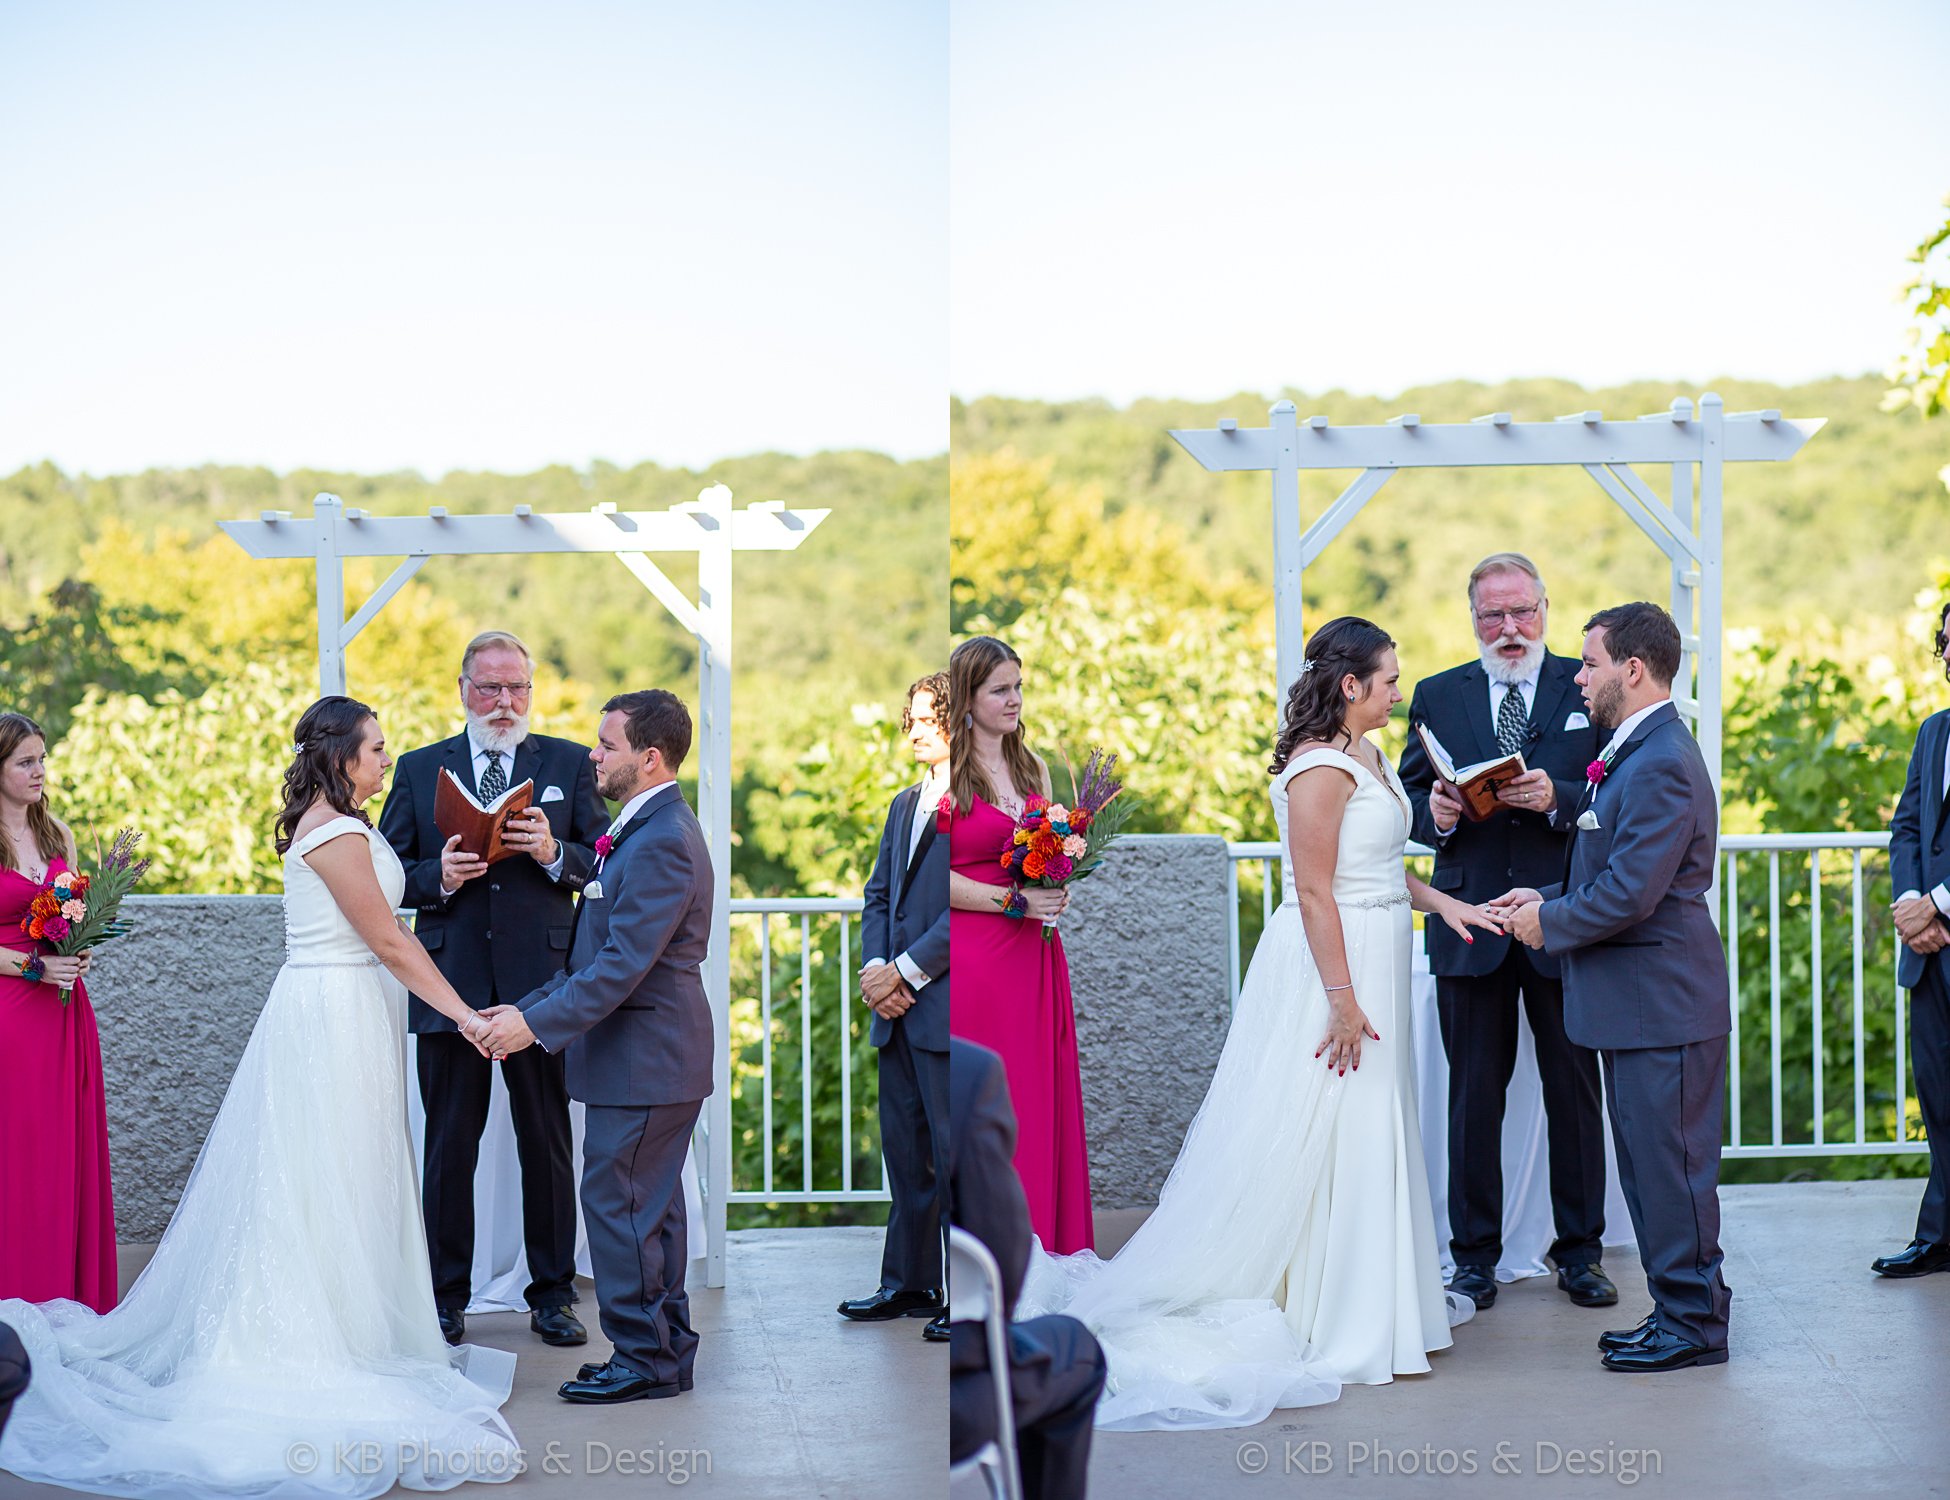 Wedding-Kirk-Darby-Lake-of-the-Ozarks-Margaritaville-Missouri-Jefferson-City-wedding-photos-KB-Photos-and-Design-449.jpg